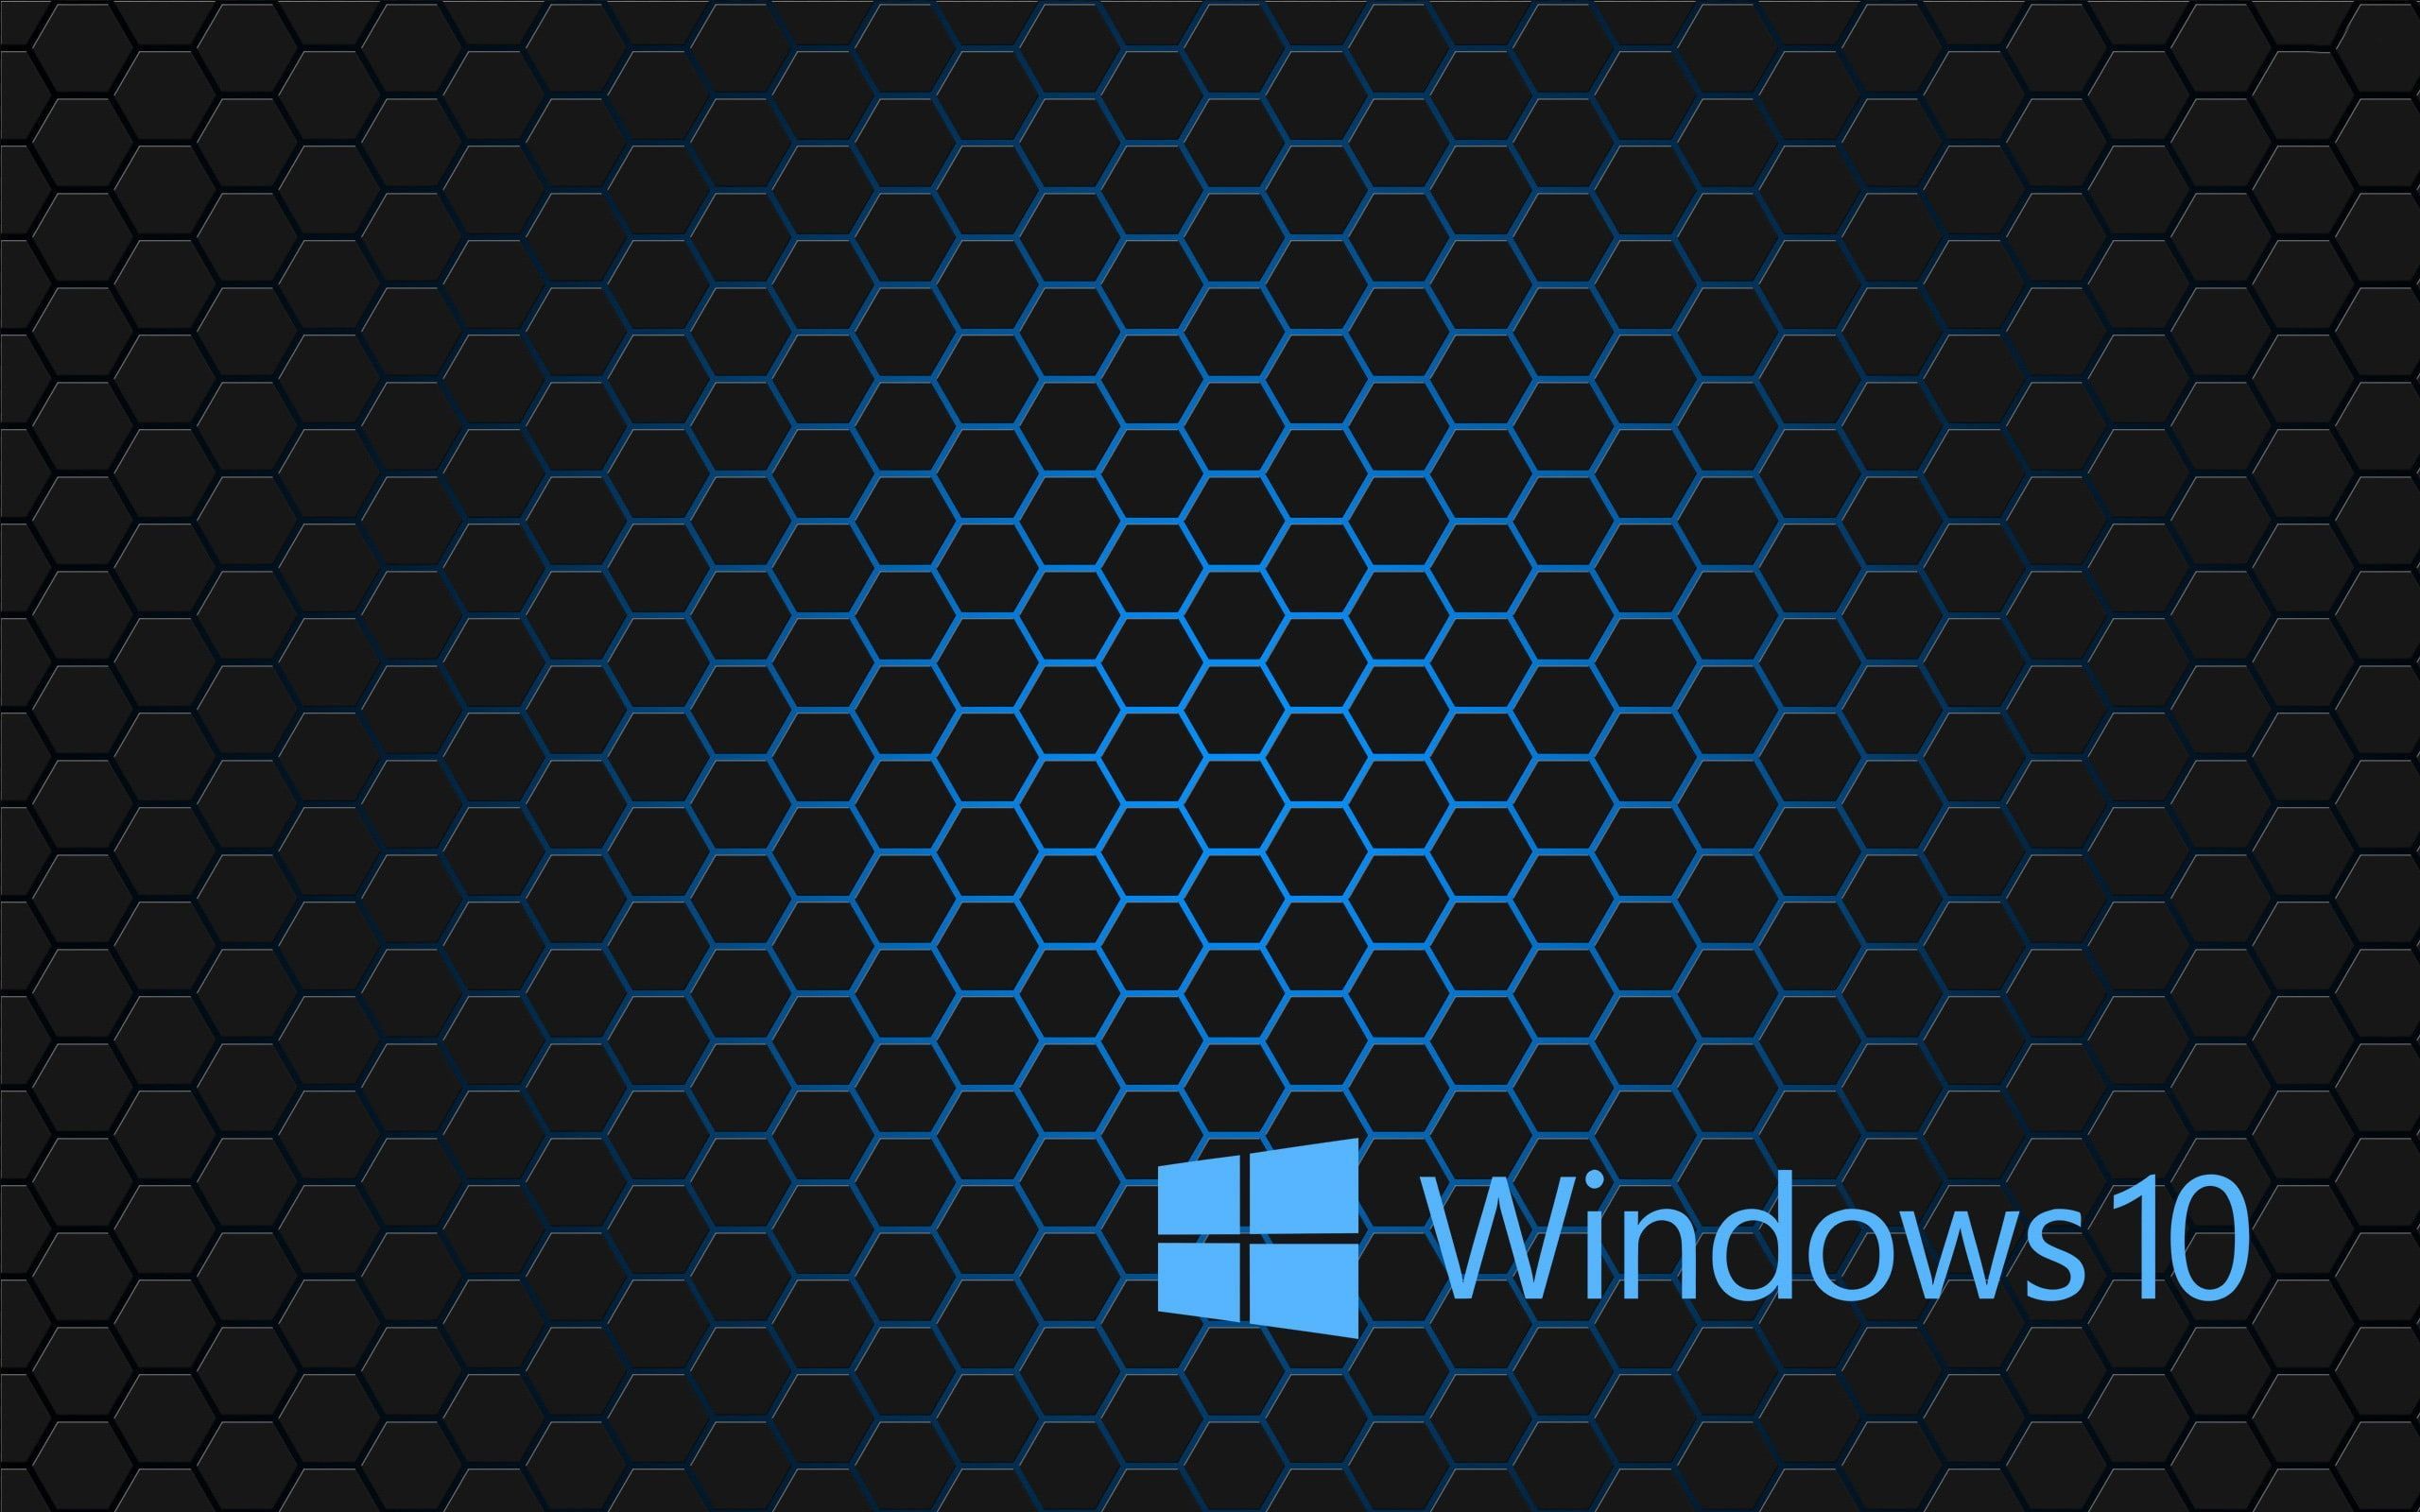 Windows 10 HD Theme Desktop Wallpapers 14, Windows 10 logo